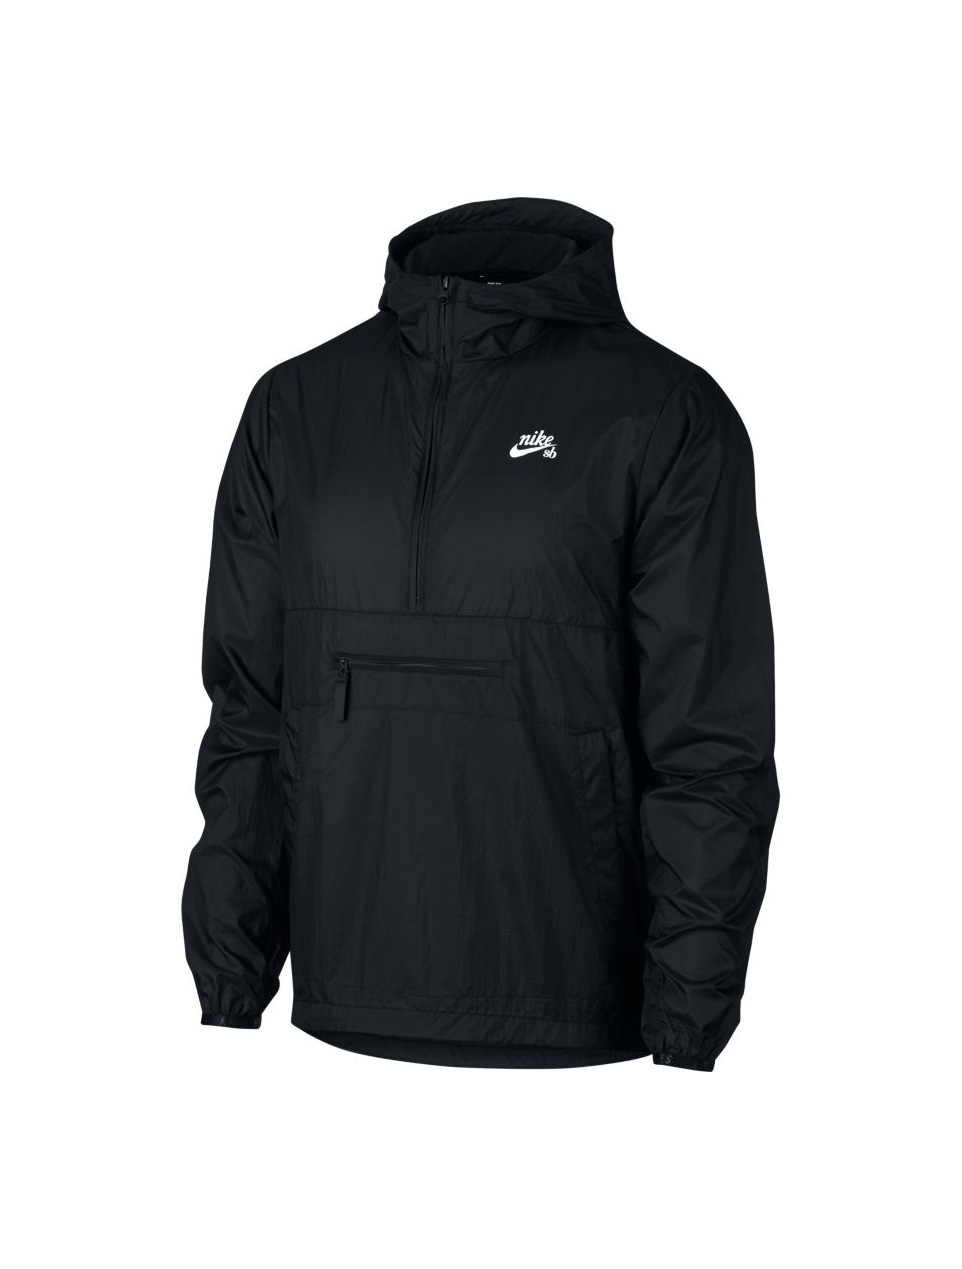 Nike SB Anorak Jacket - Black Black White - WeAreCivil.com